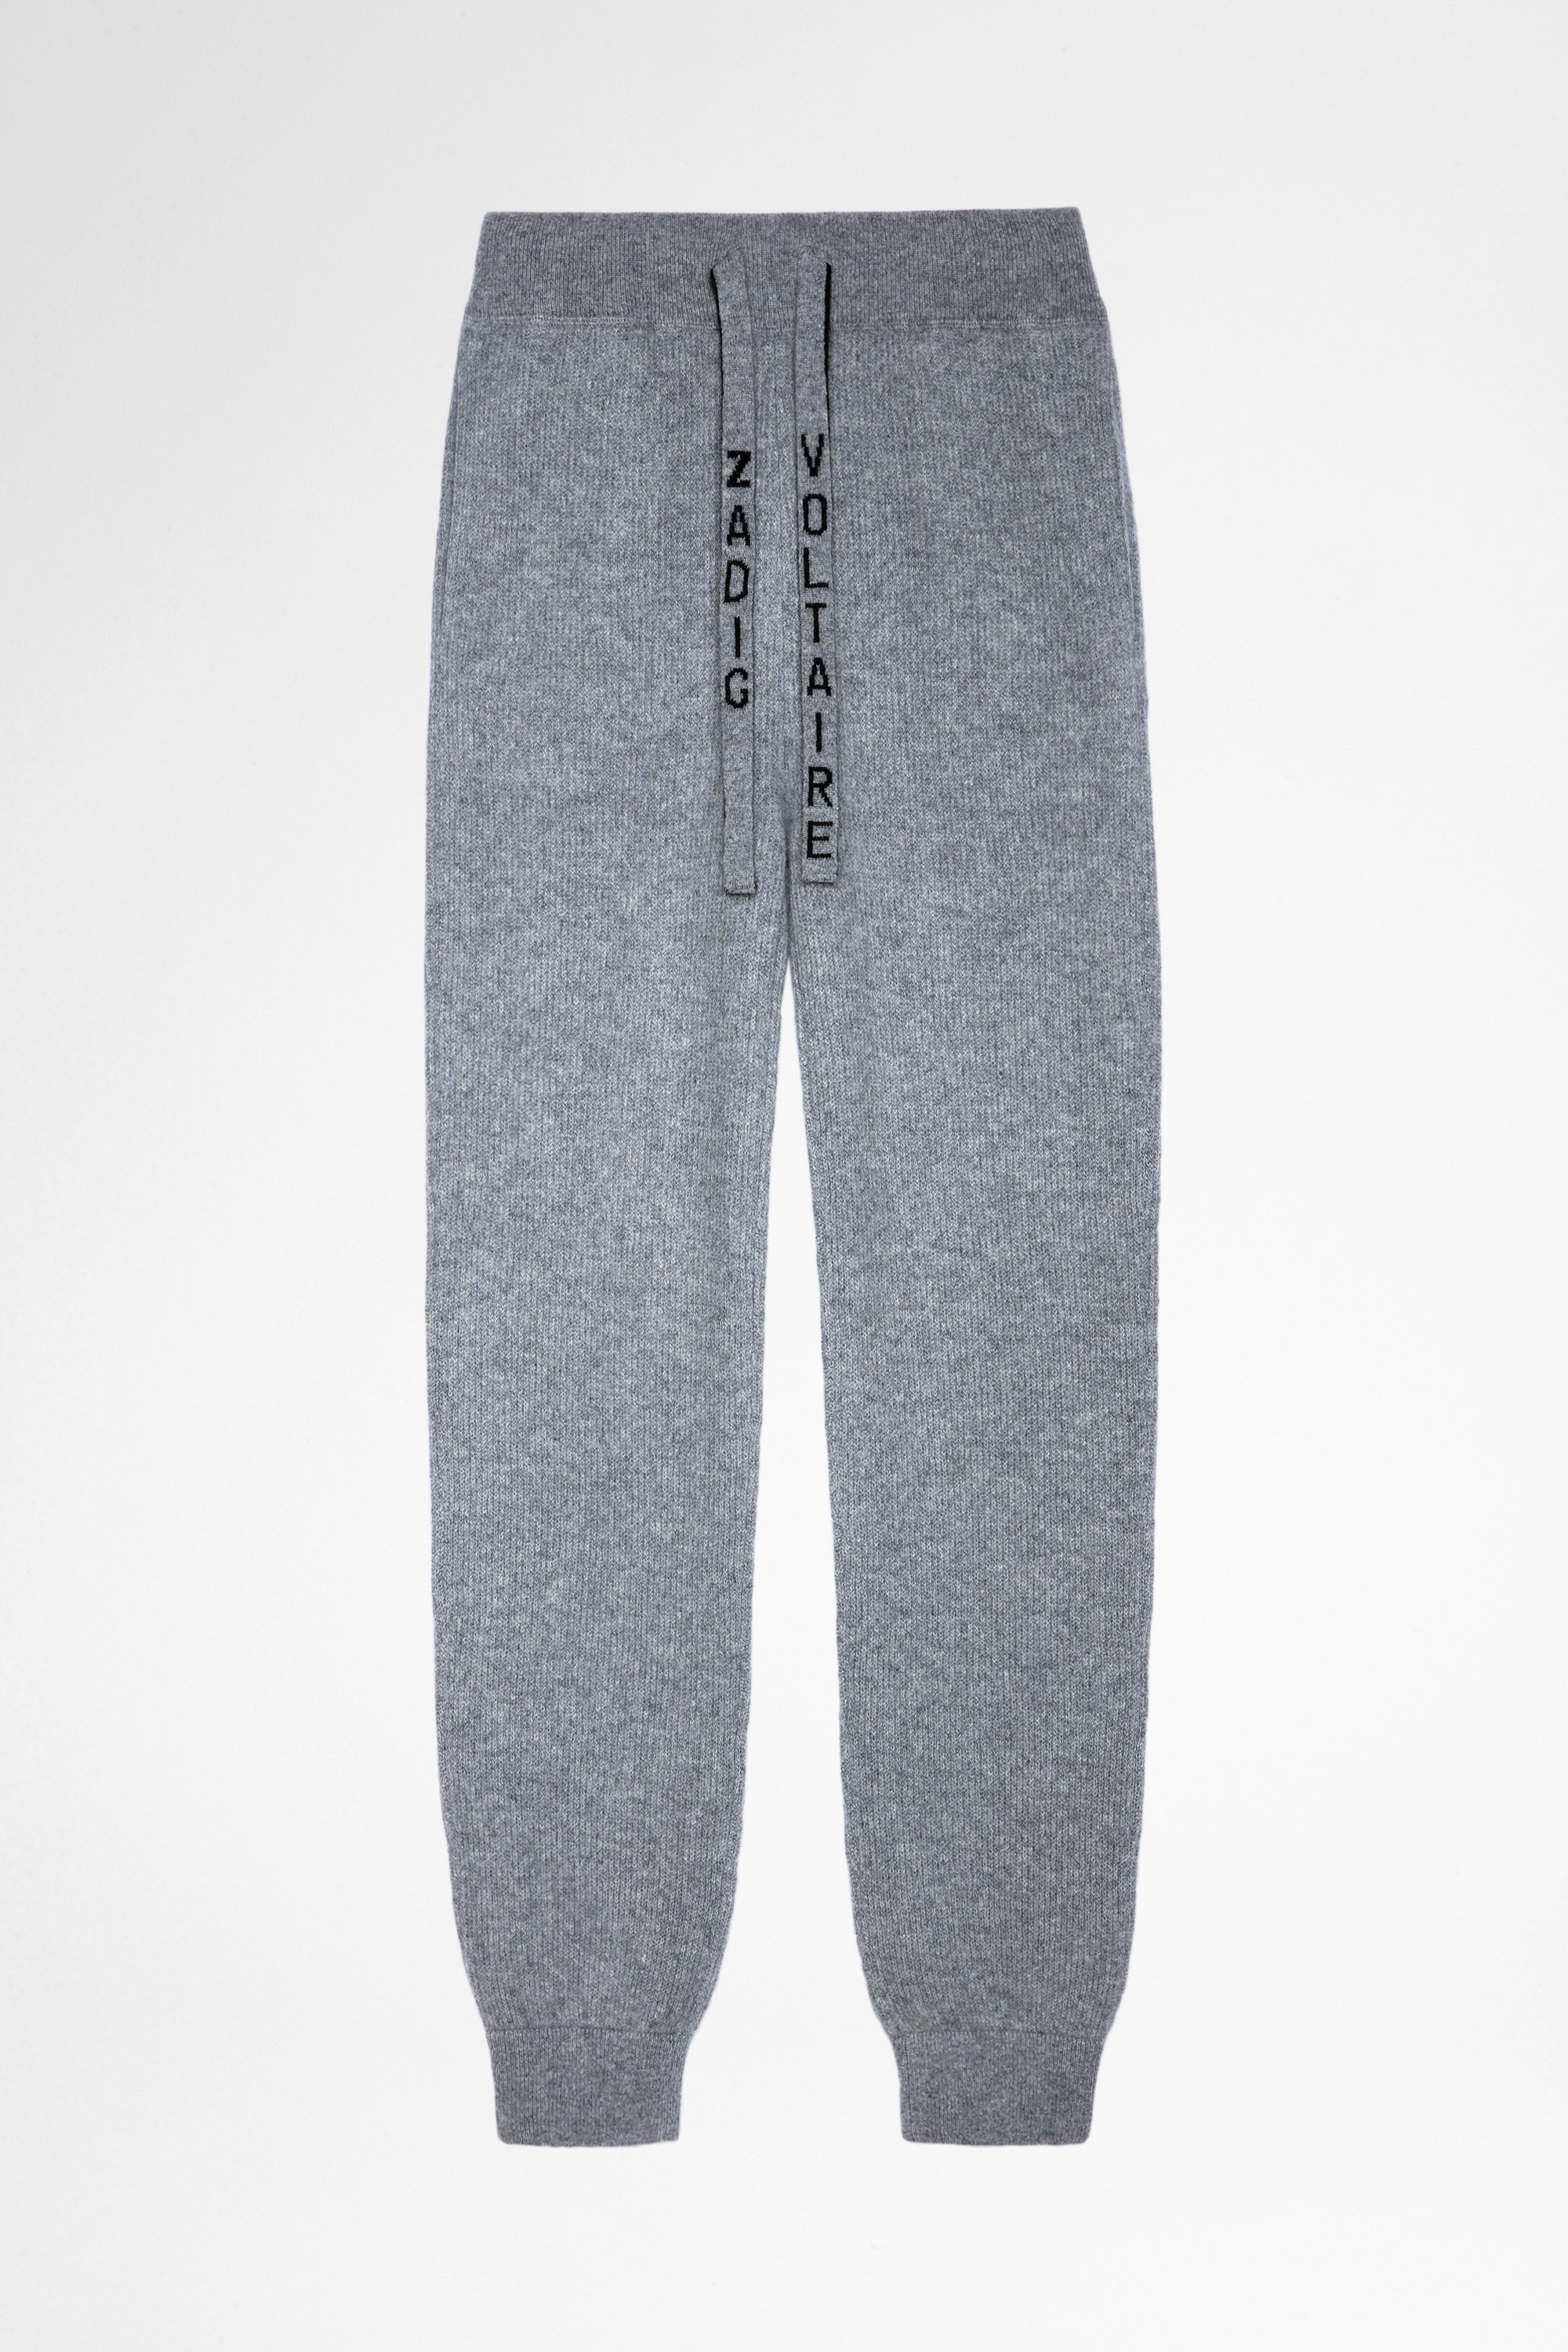 Steevy パンツ カシミヤ Women's gray cashmere sweatpants